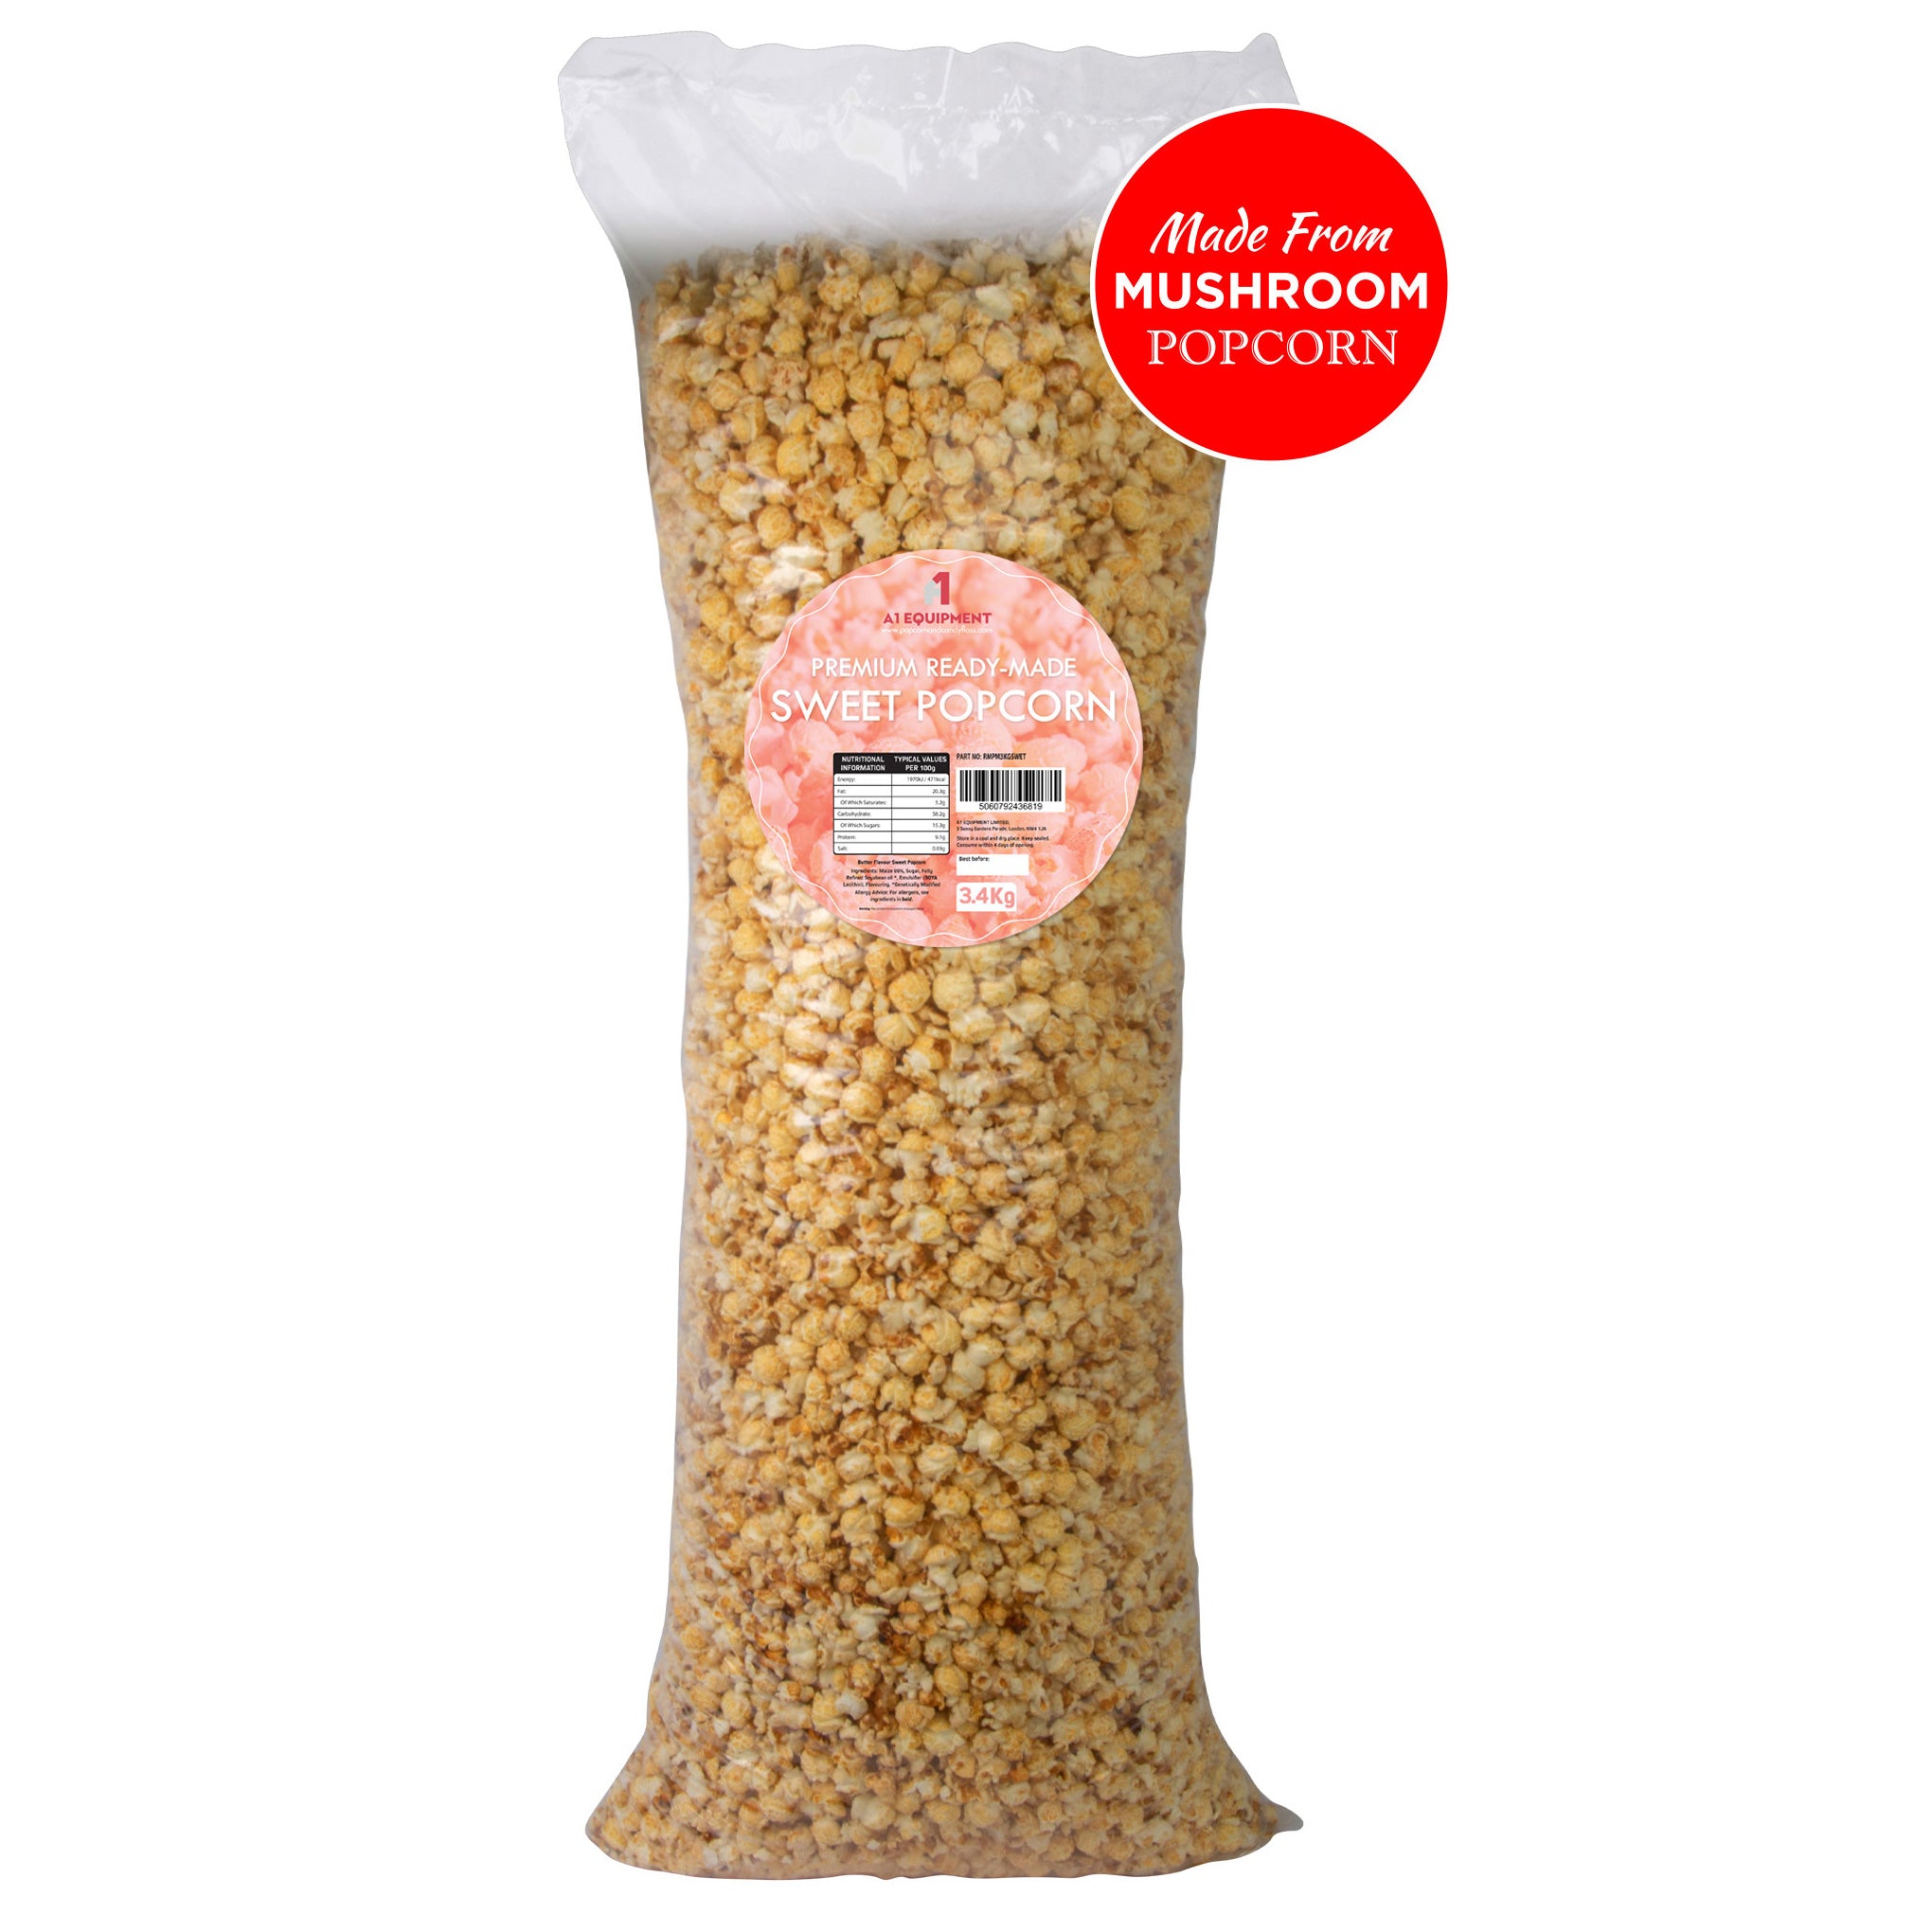 Premium Ready-Made Sweet Popcorn 3.4kg